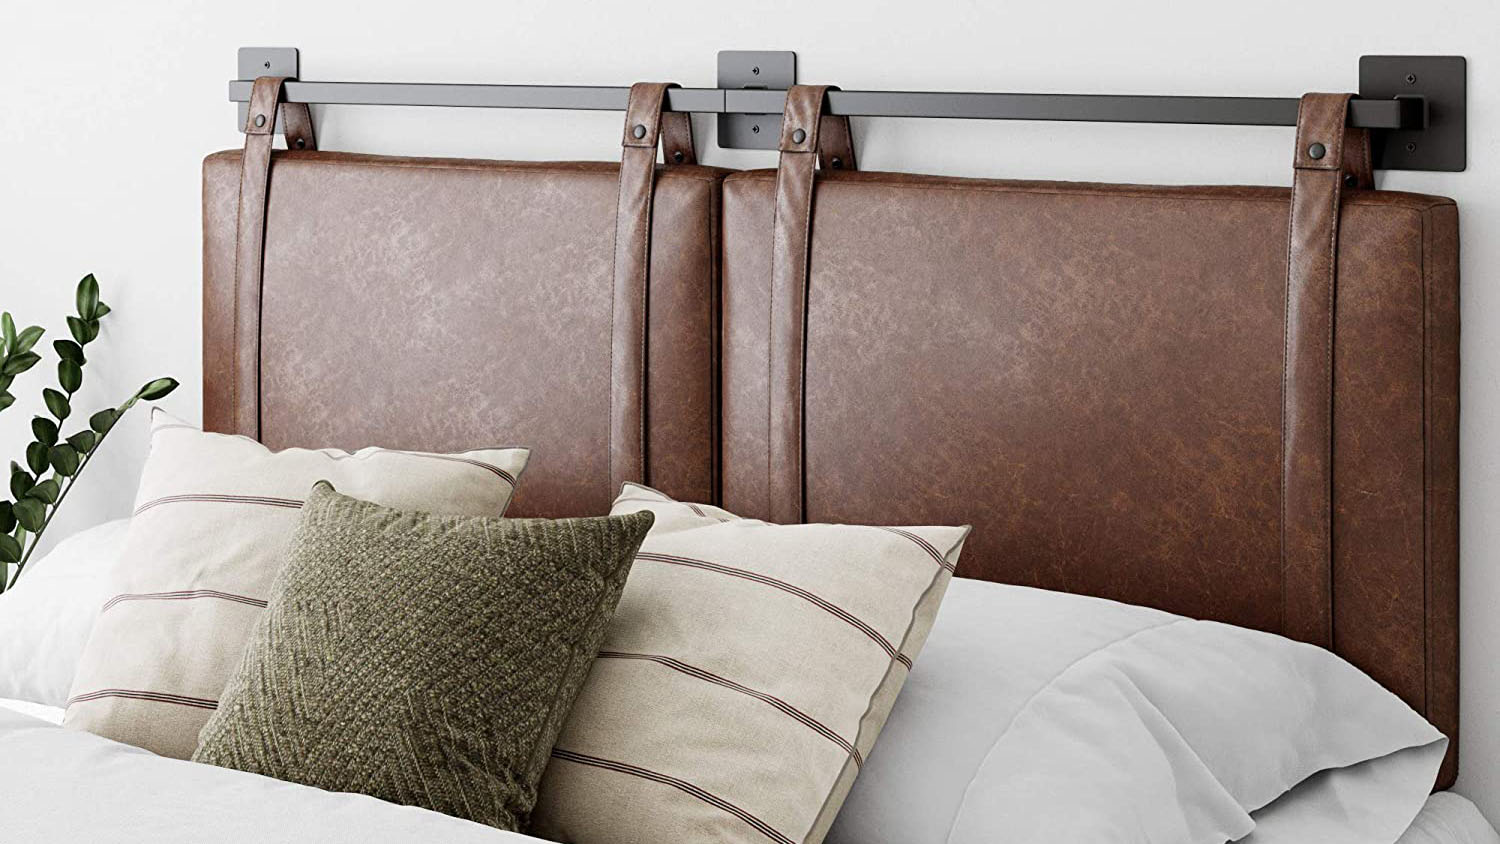 15 Best Headboards For Adjustable Beds, Headboard For King Size Adjustable Bed